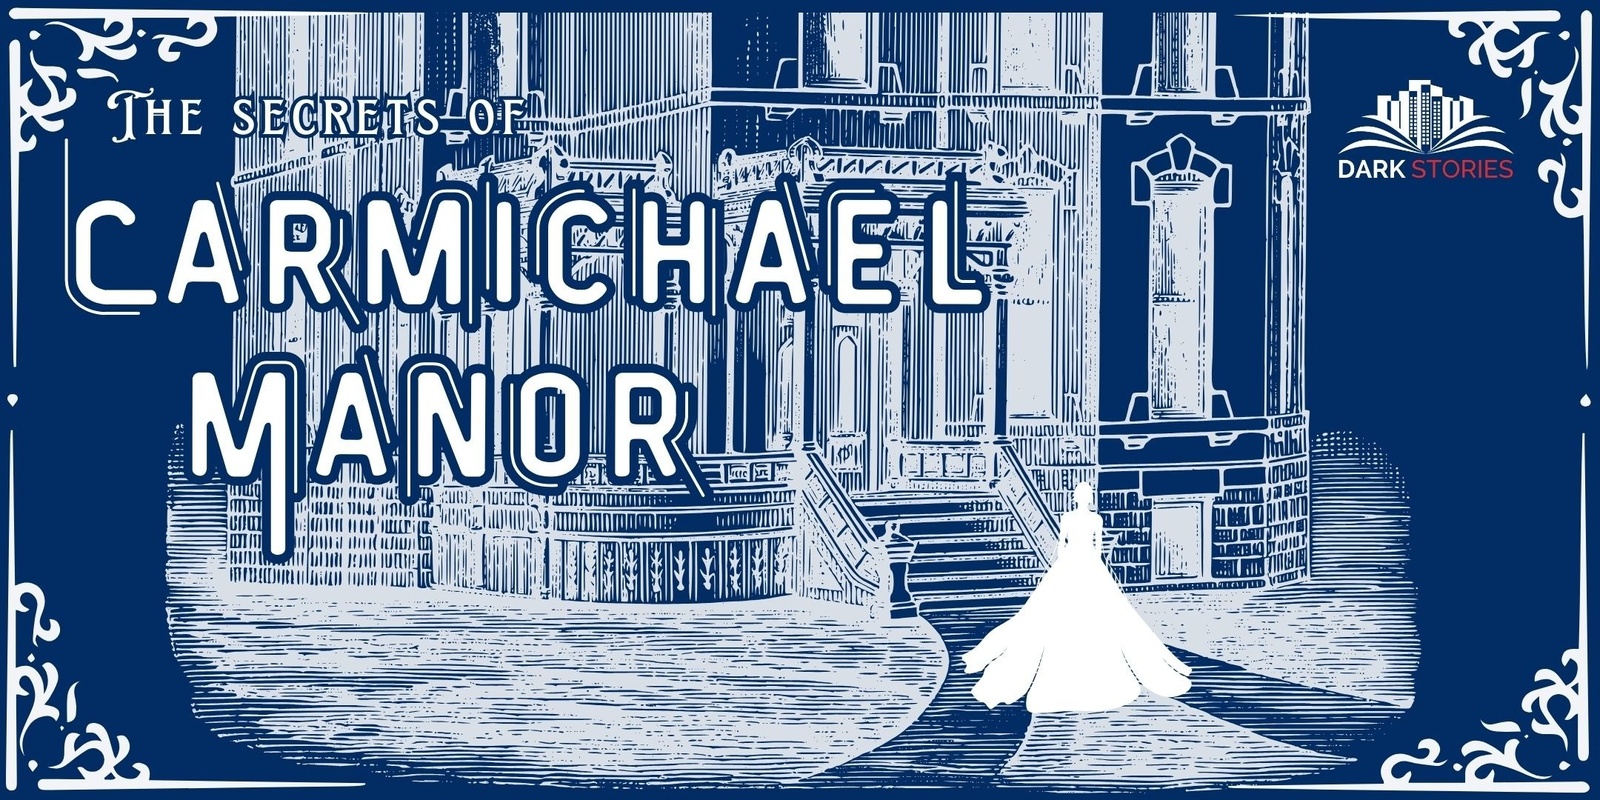 Banner image for The Secrets of Carmichael Manor - Sydney